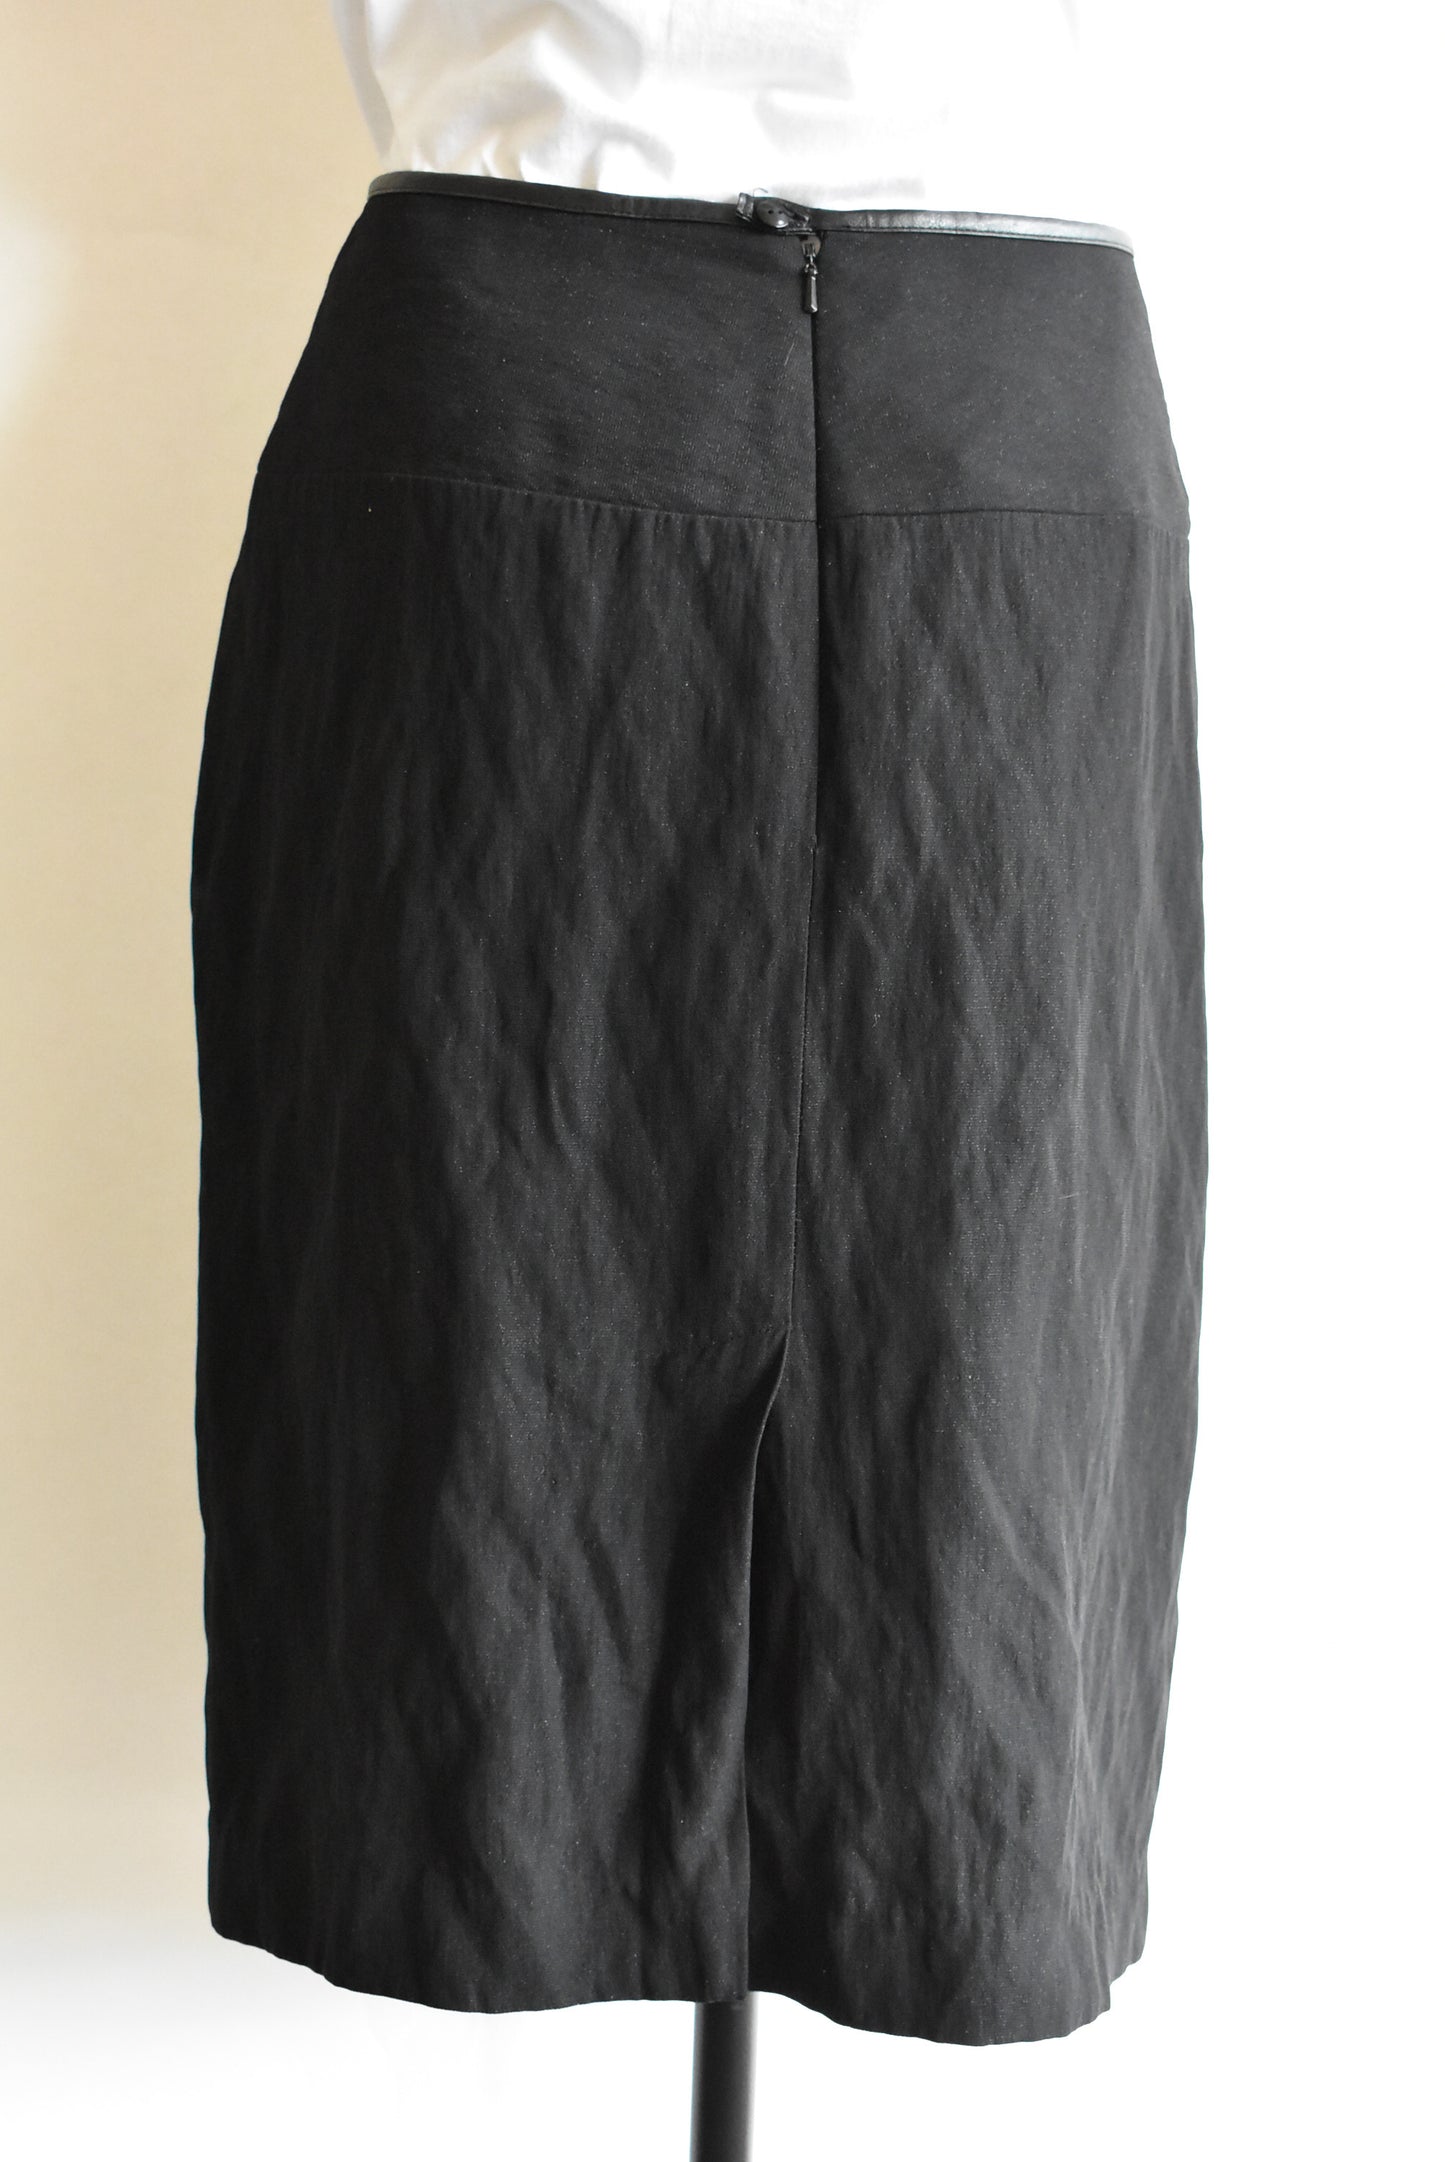 Ricochet black skirt made in nz, size 14